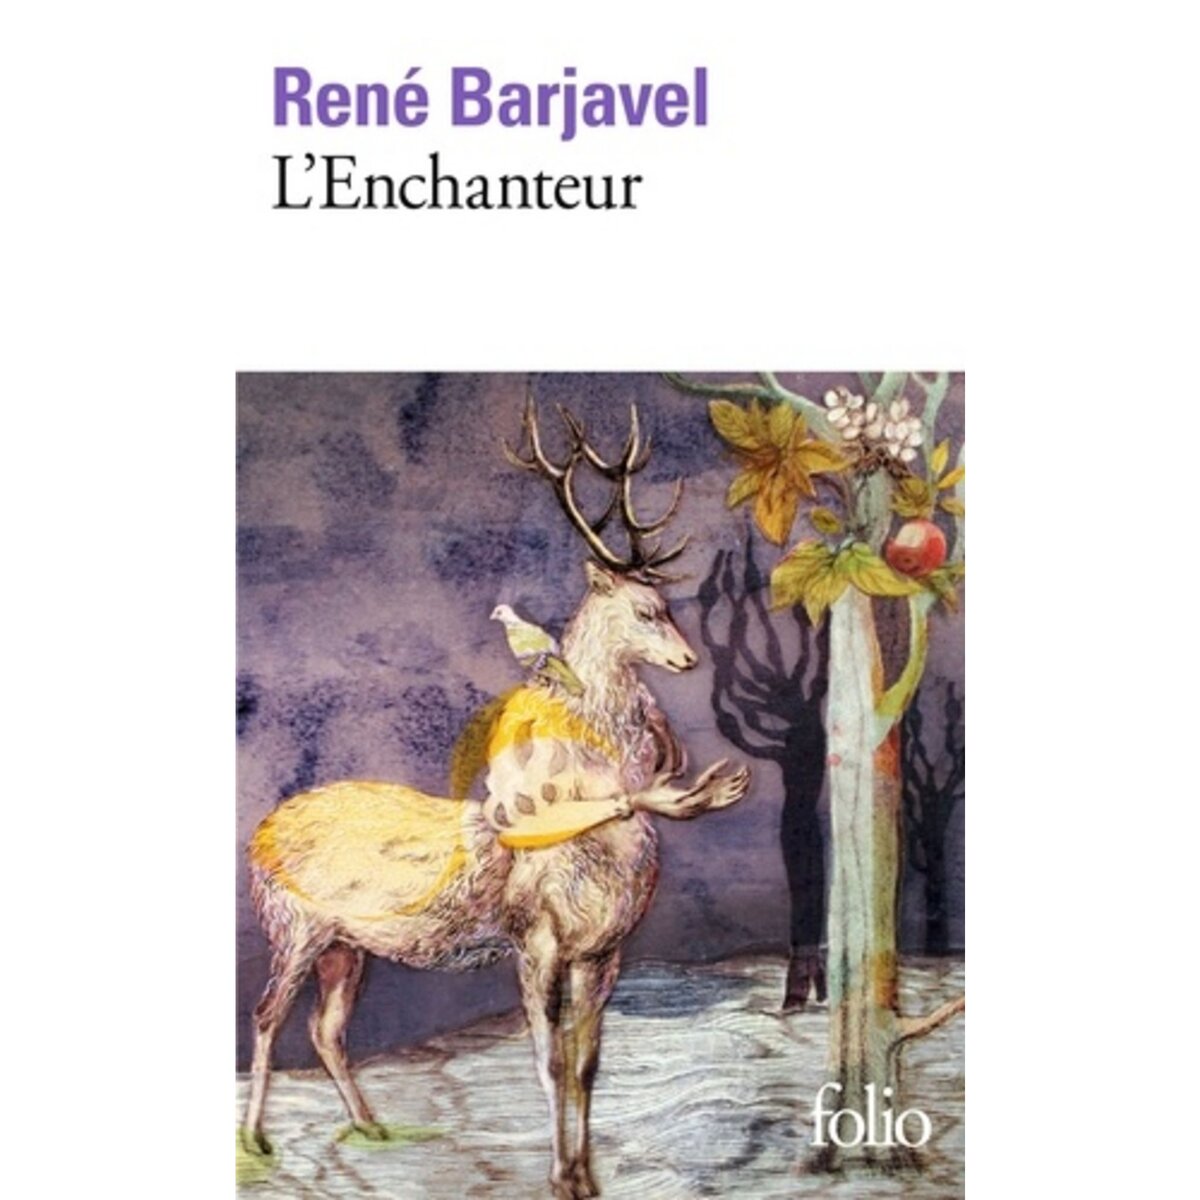  L'ENCHANTEUR, Barjavel René